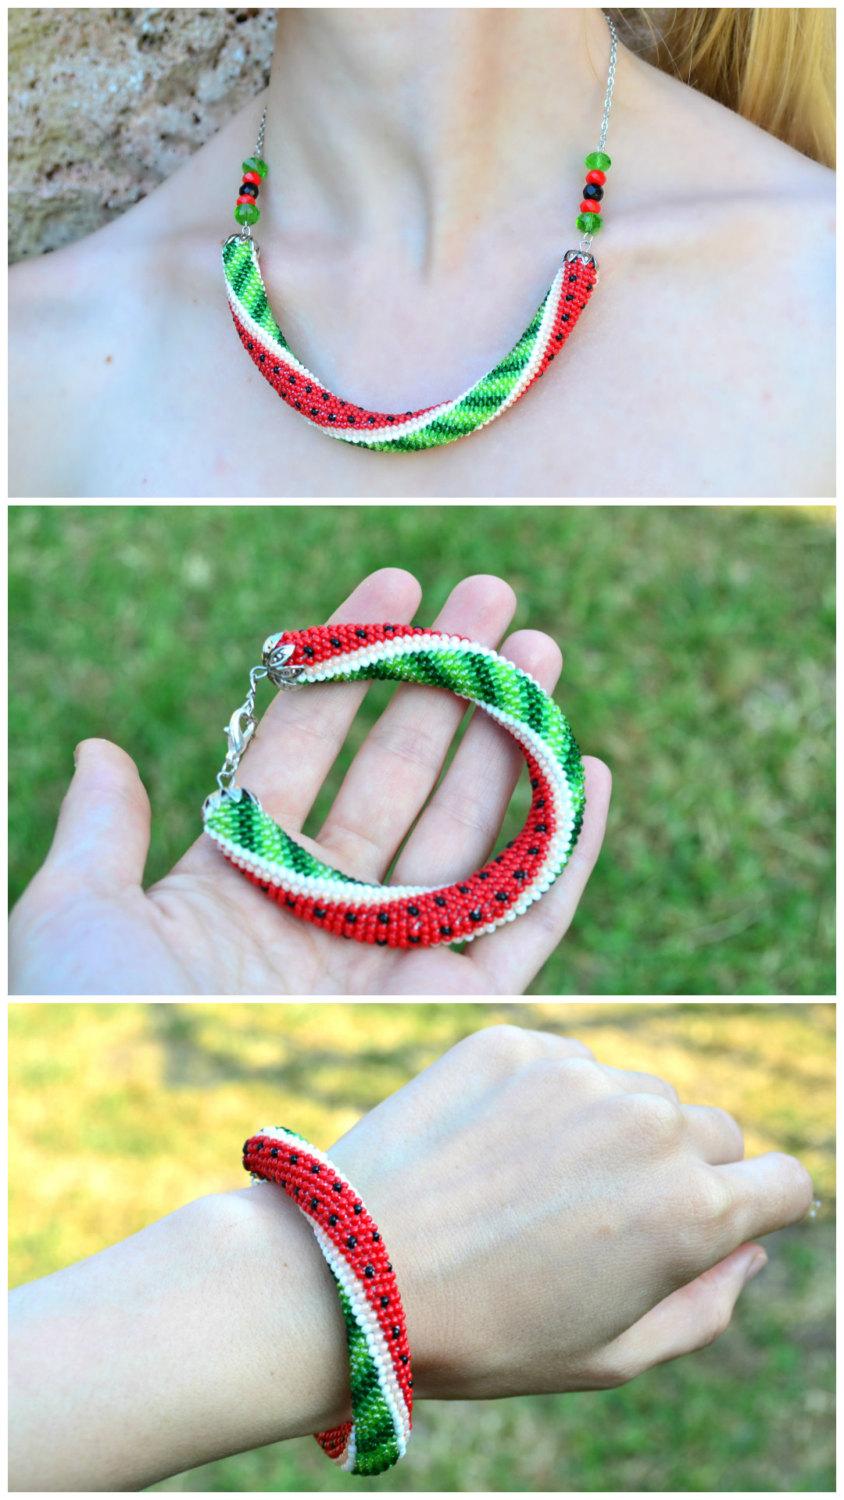 Hochzeit - 10% OFF Watermelon bracelet necklace jewelry. Berry jewelry bracelet necklace. Green red summer berry bead crochet rope bracelet jewelry.